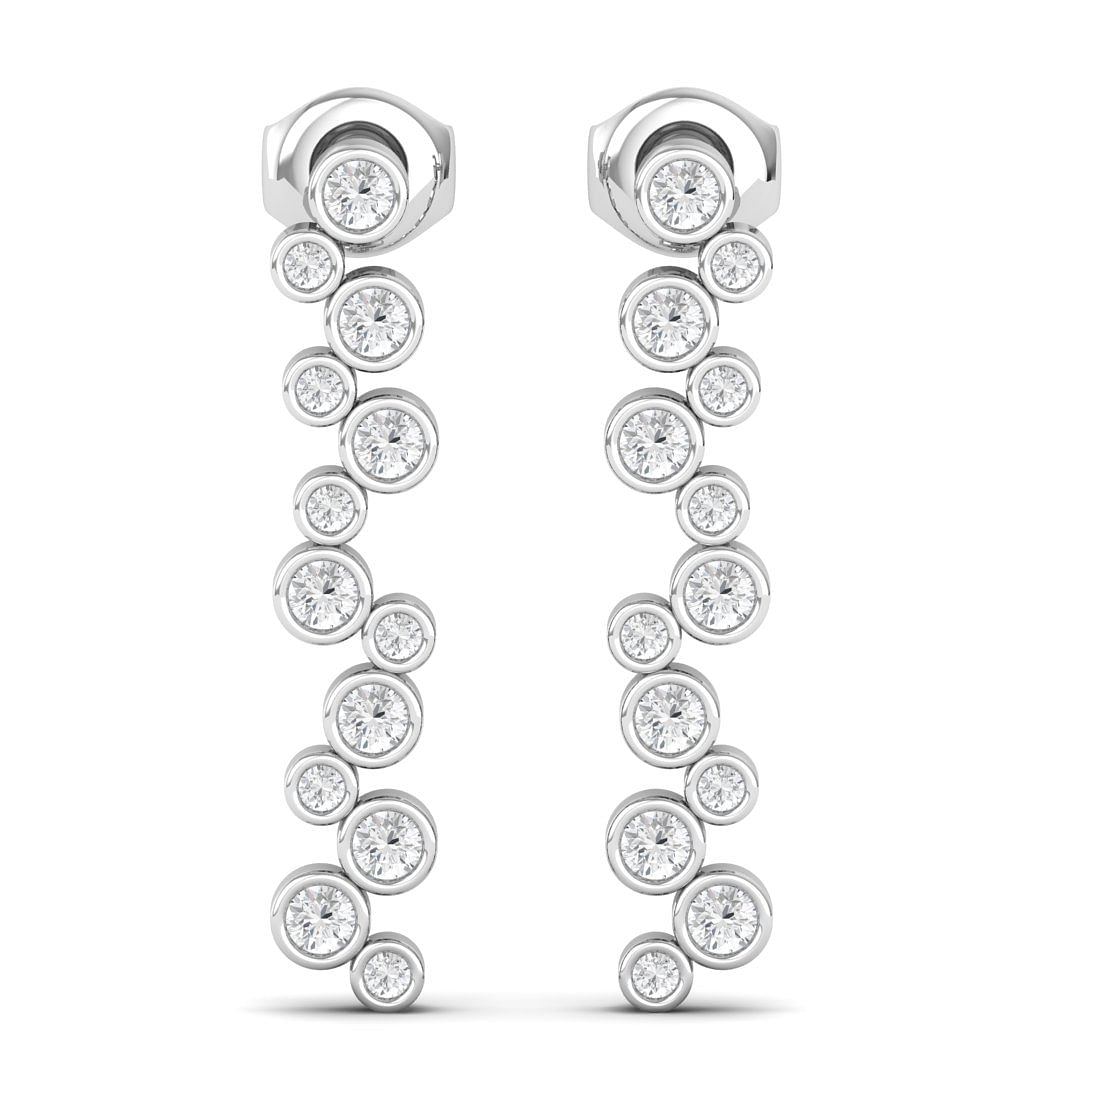 Rose Diamond Earrings with white gold earring